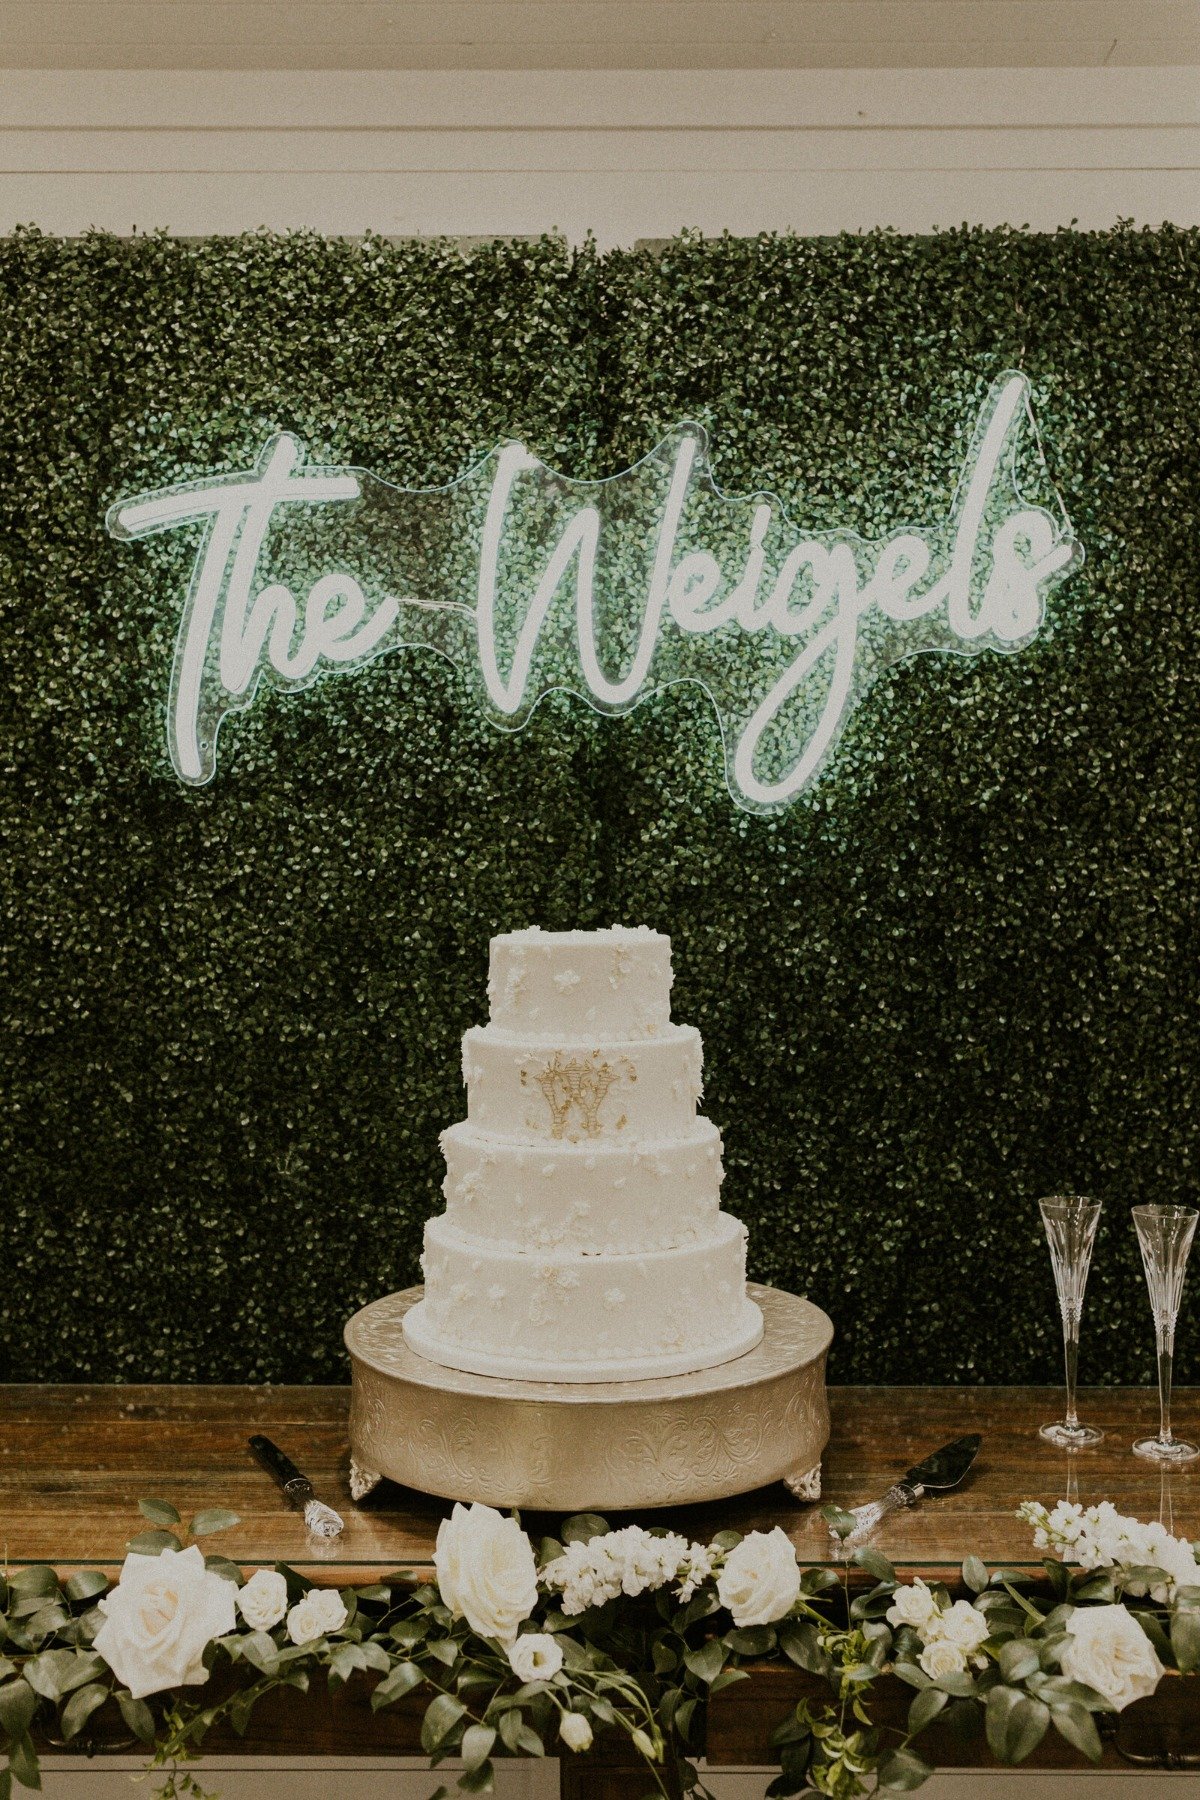 Customized neon sign behind white monogrammed wedding cake